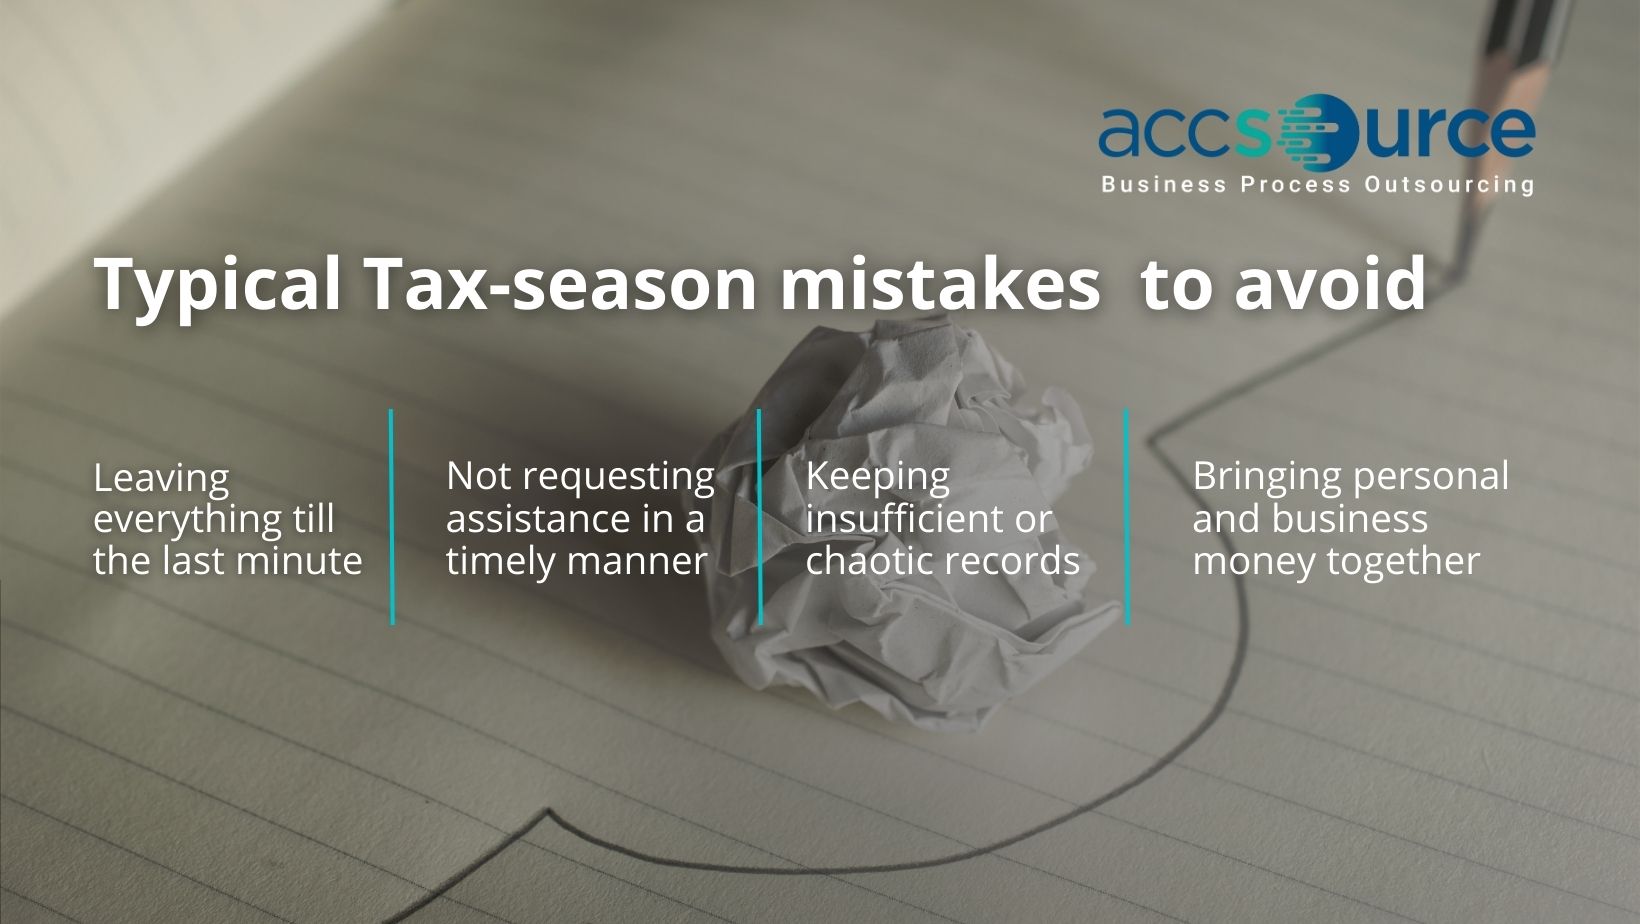 Preparing Financials and Tax Returns - - AccSource